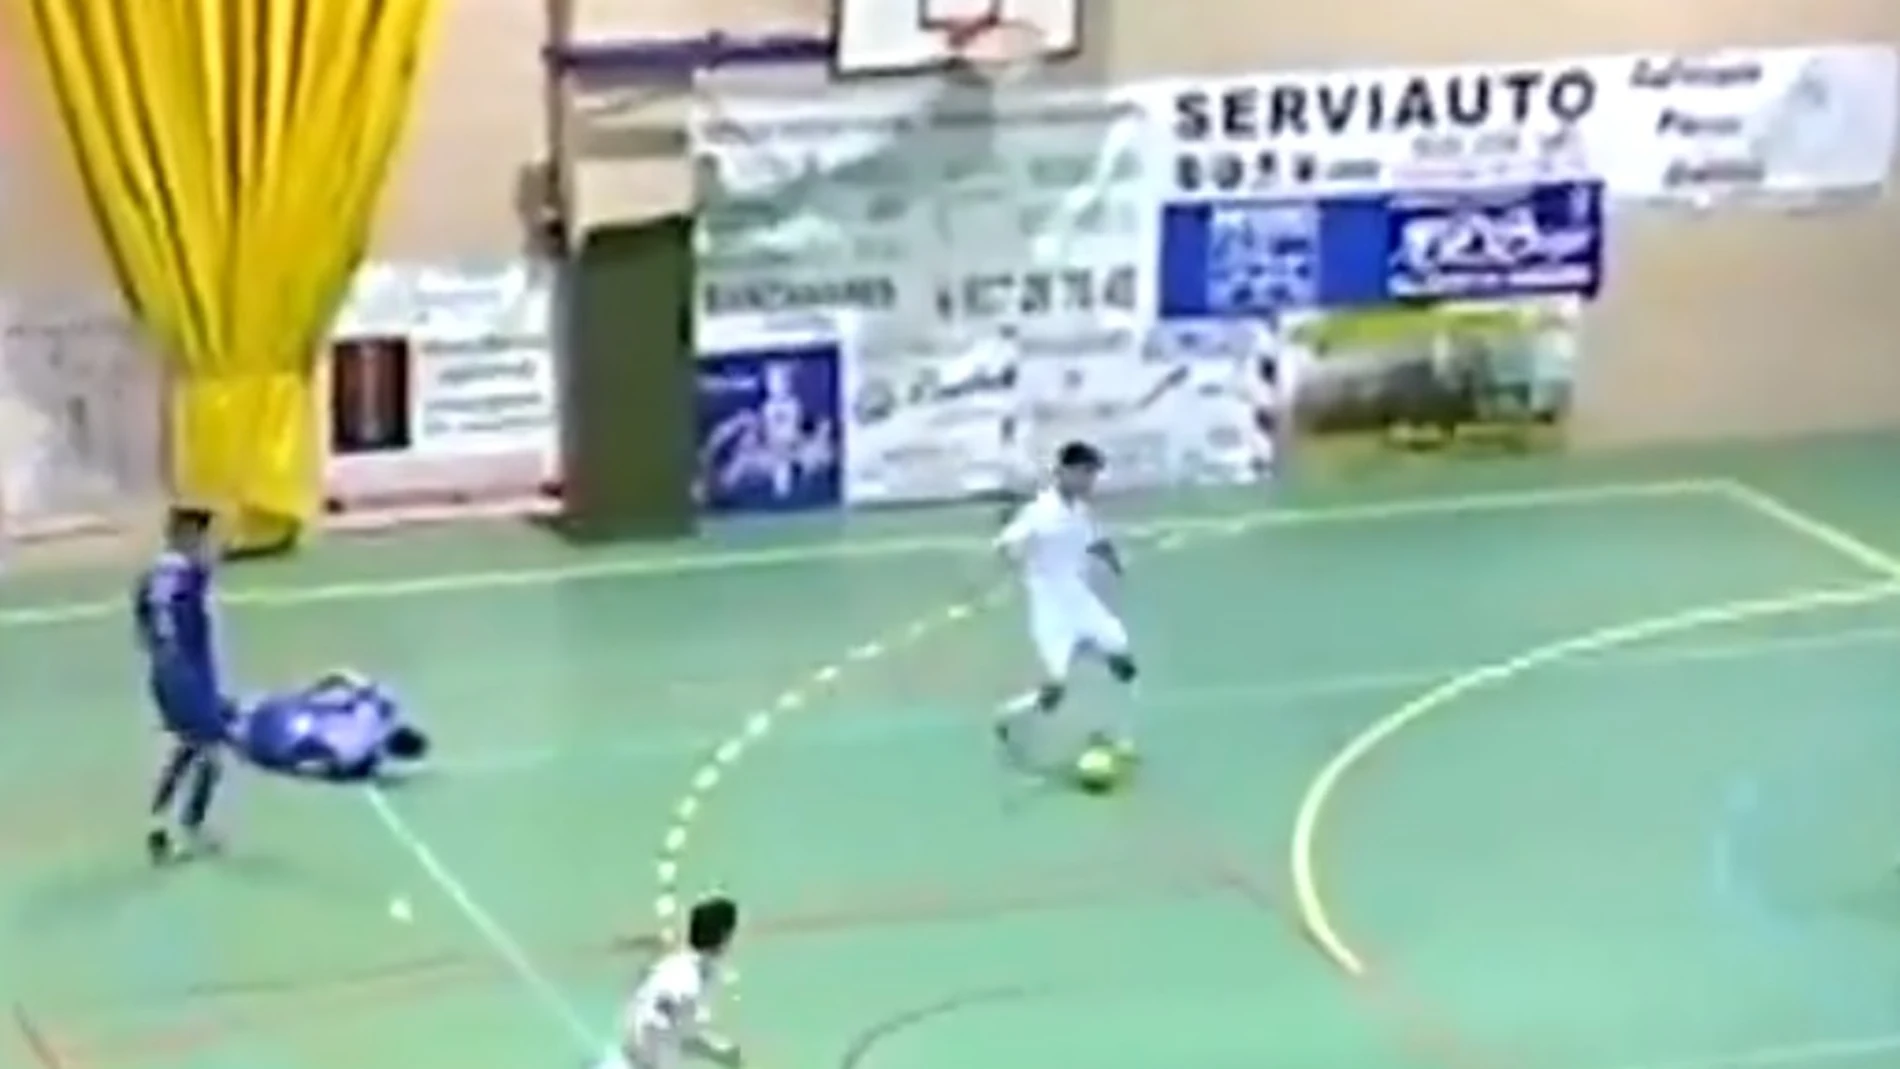 La jugada de Fair Play del Santiago Futsal